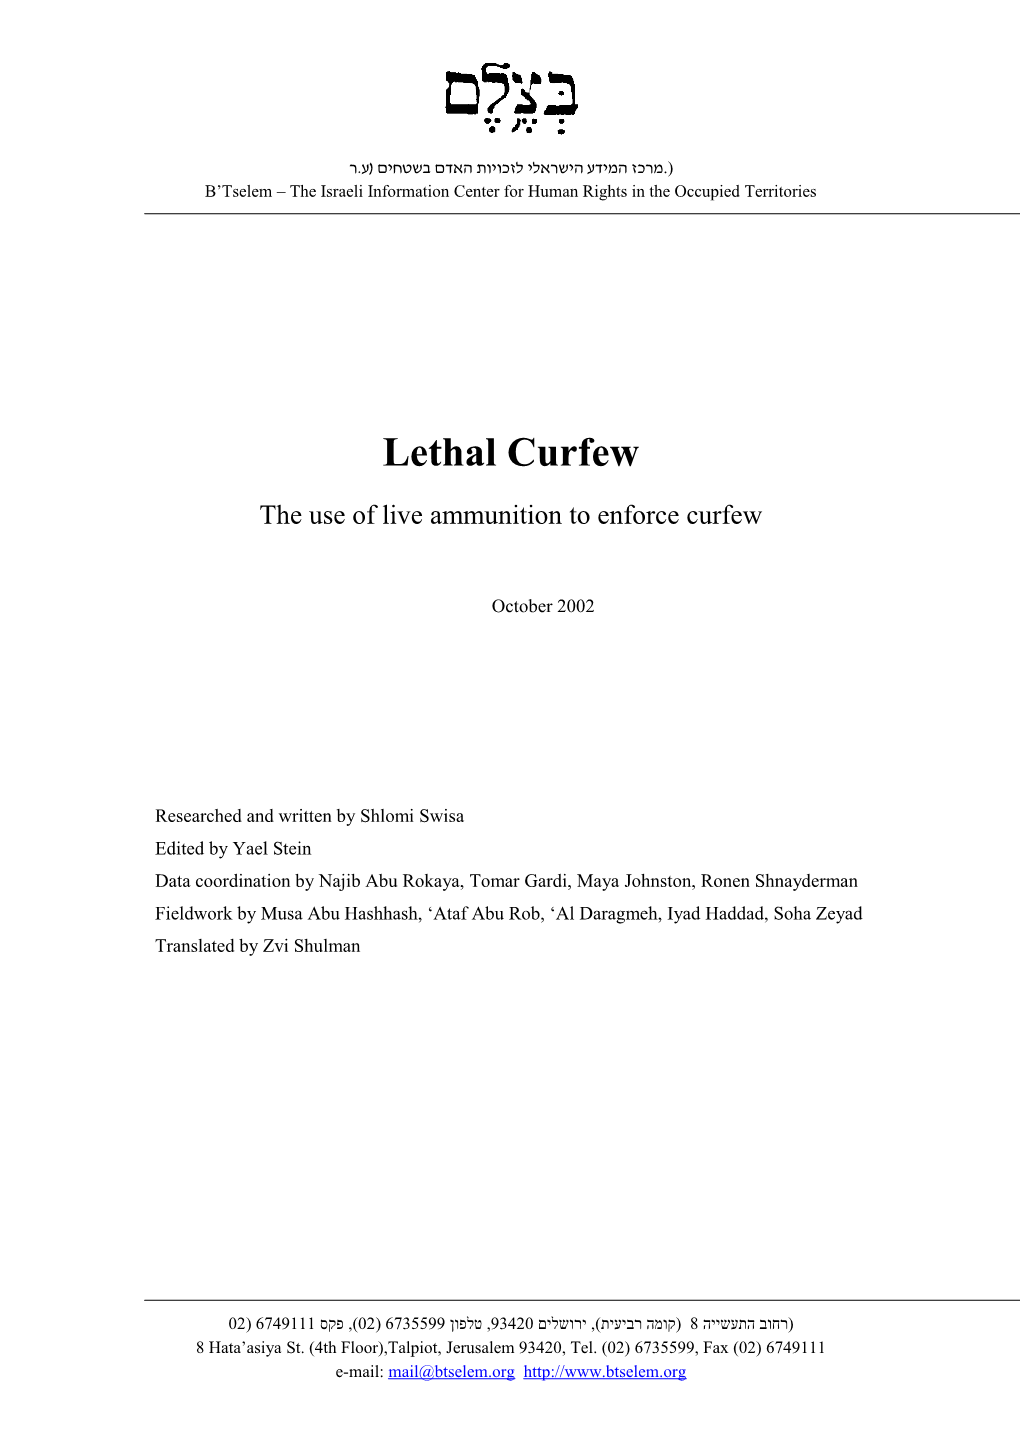 B'tselem Report: Lethal Curfew, Information Sheet, October 2002